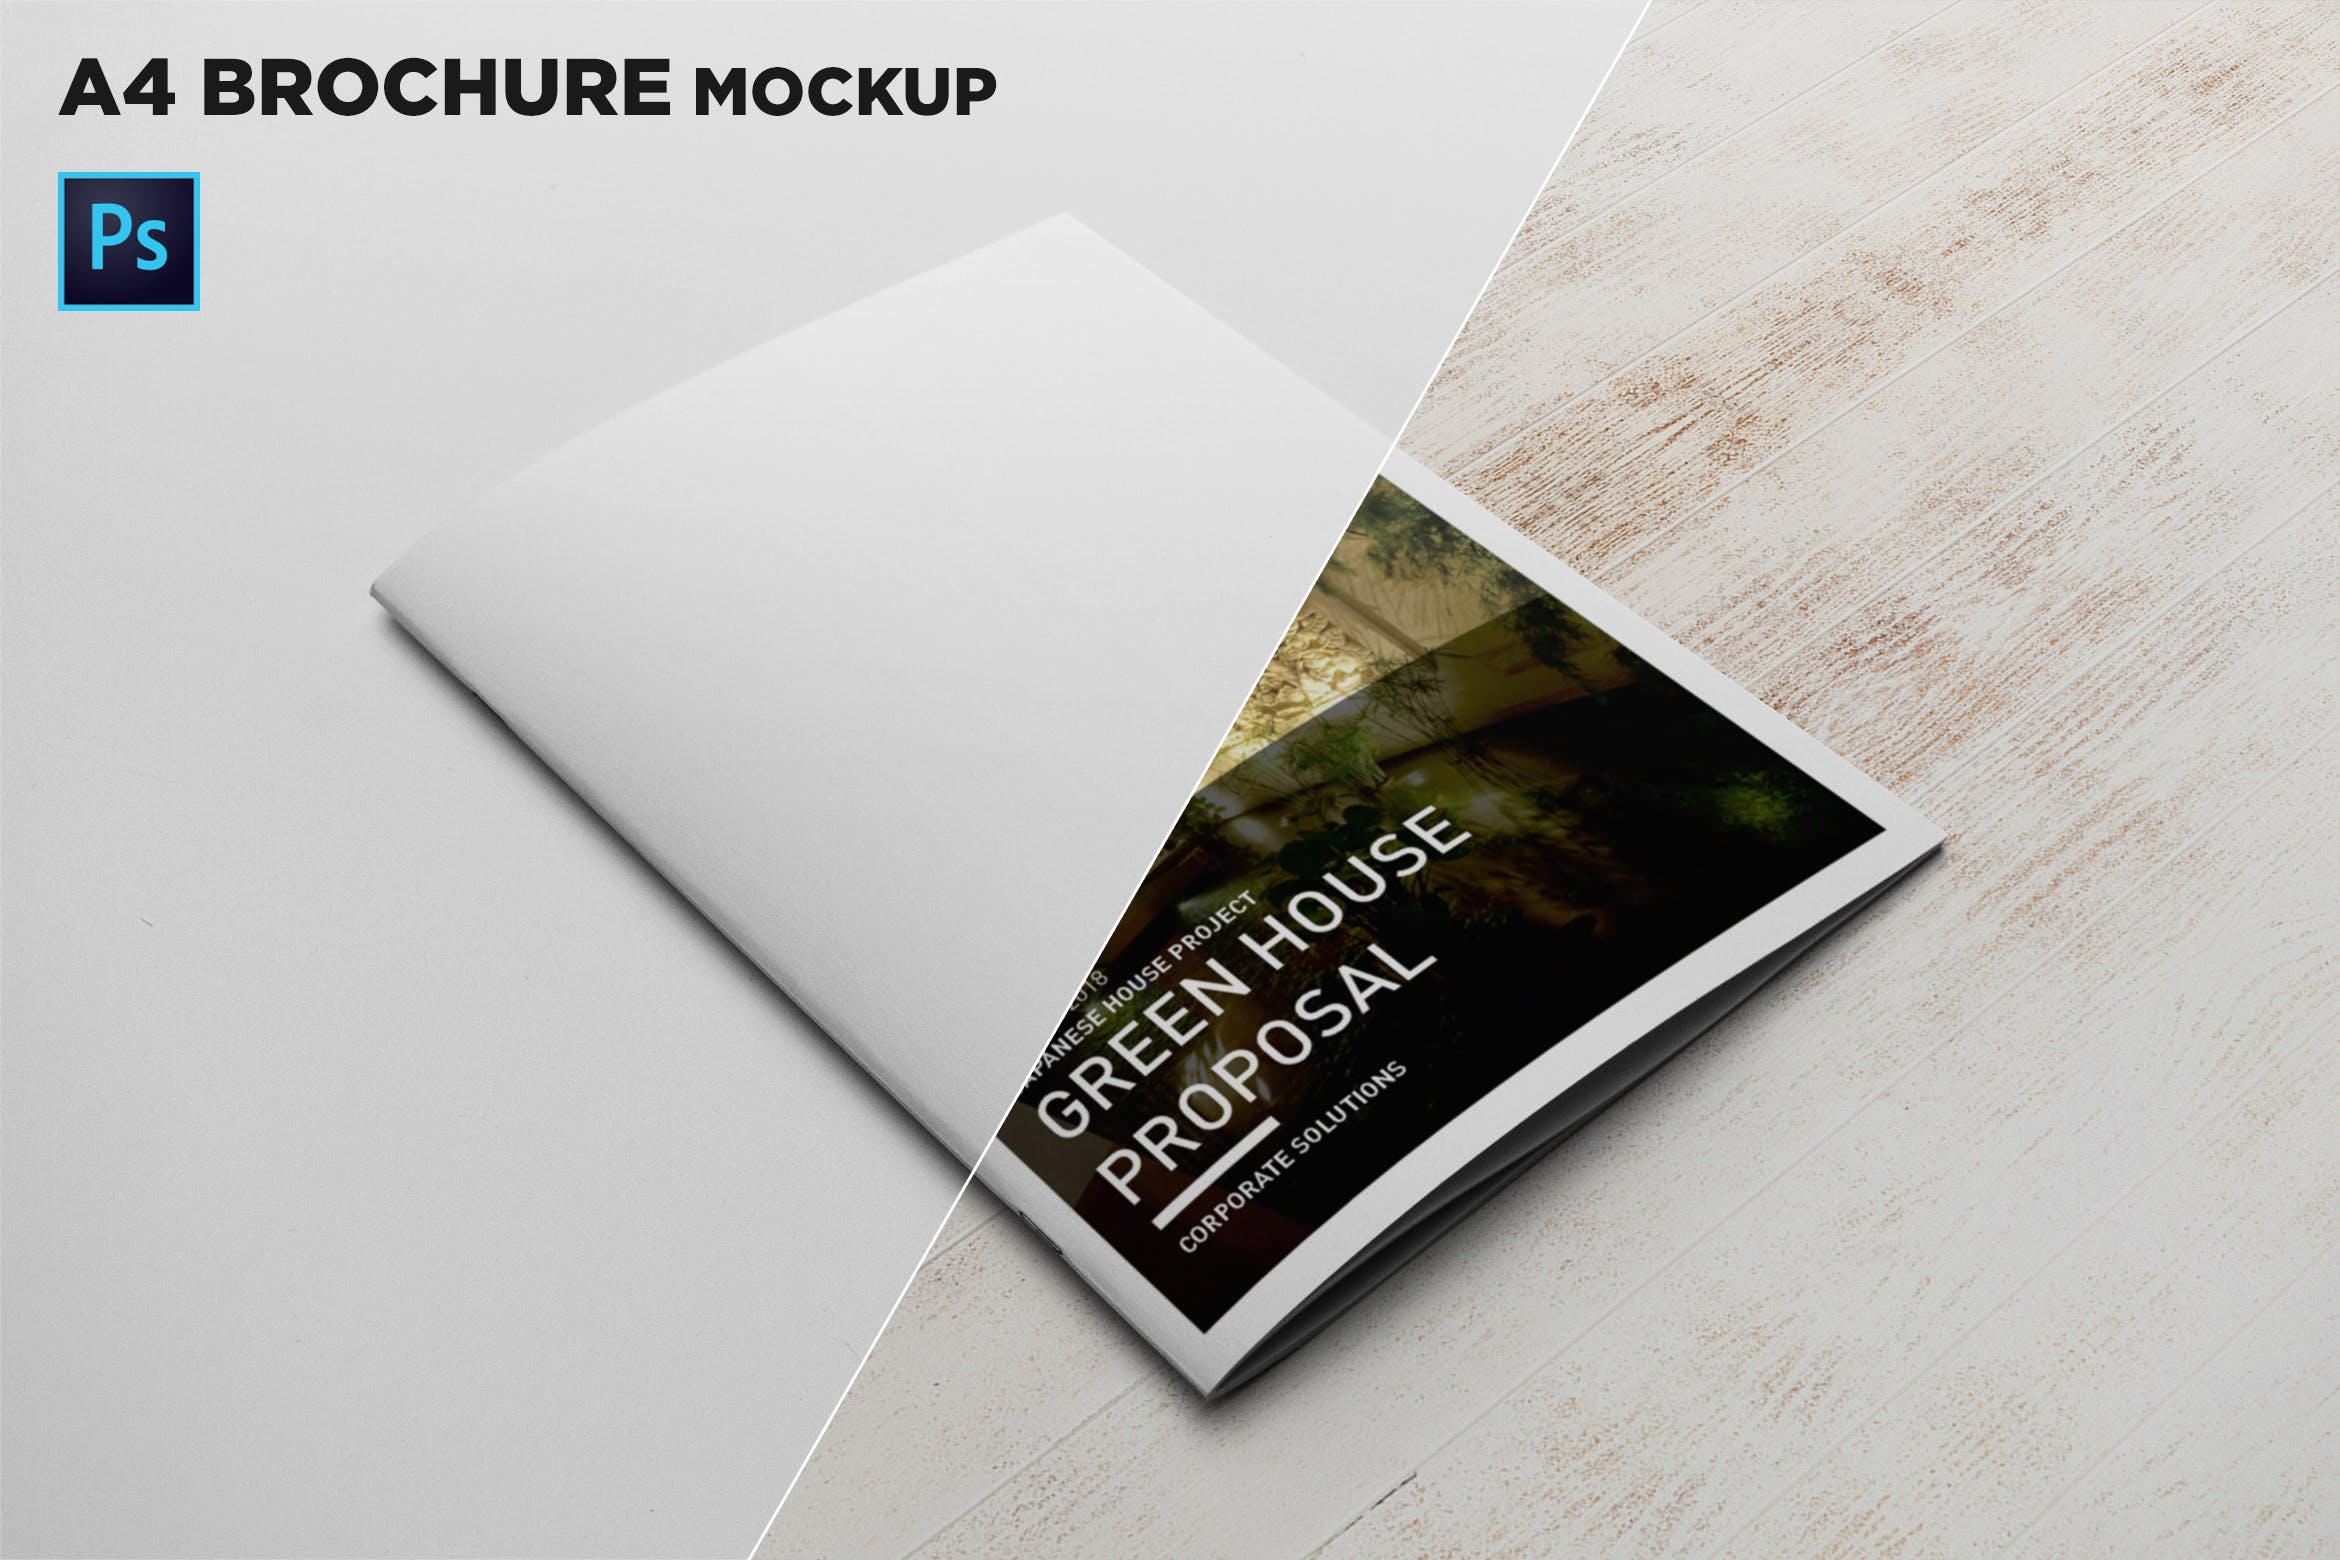 A4宣传小册子/企业画册封面设计45度角视图样机大洋岛精选 A4 Brochure Cover Mockup插图